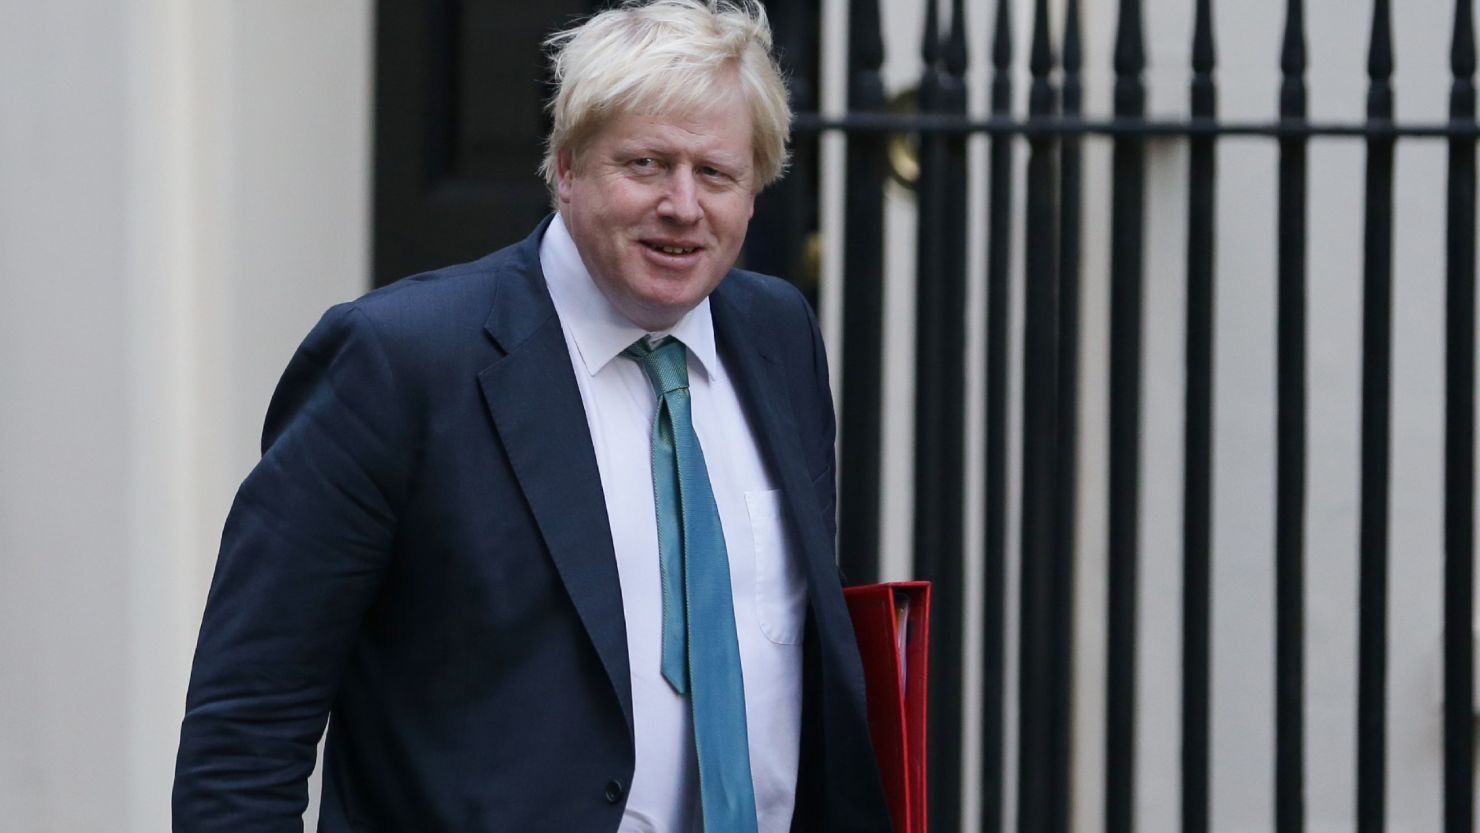 UK Foreign Secretary Boris Johnson, known for being blunt, has criticized longtime ally Saudi Arabia.